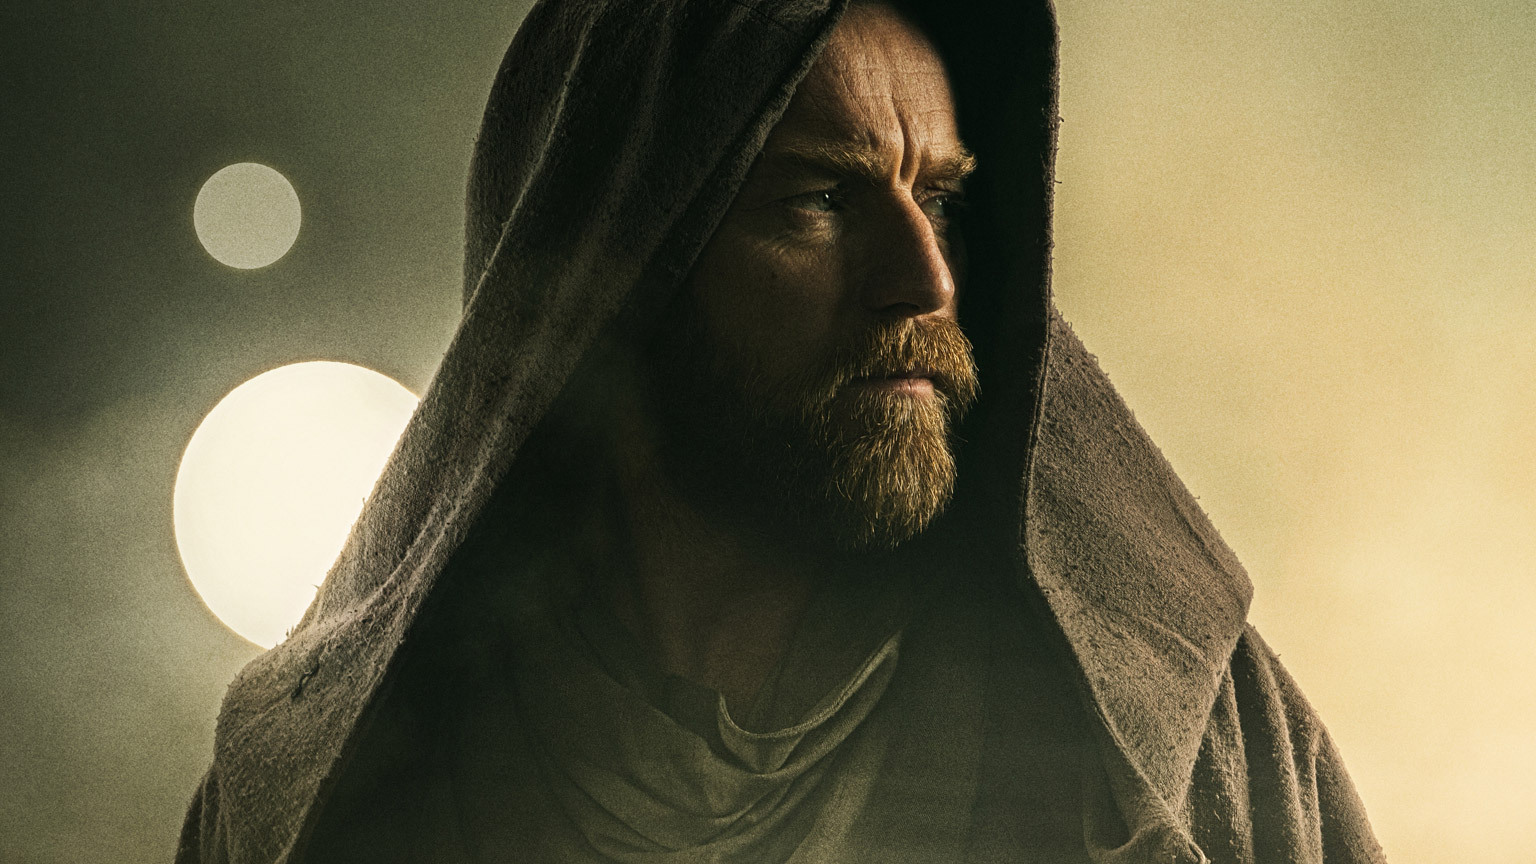 Breaking Down the Obi-Wan Kenobi Trailer